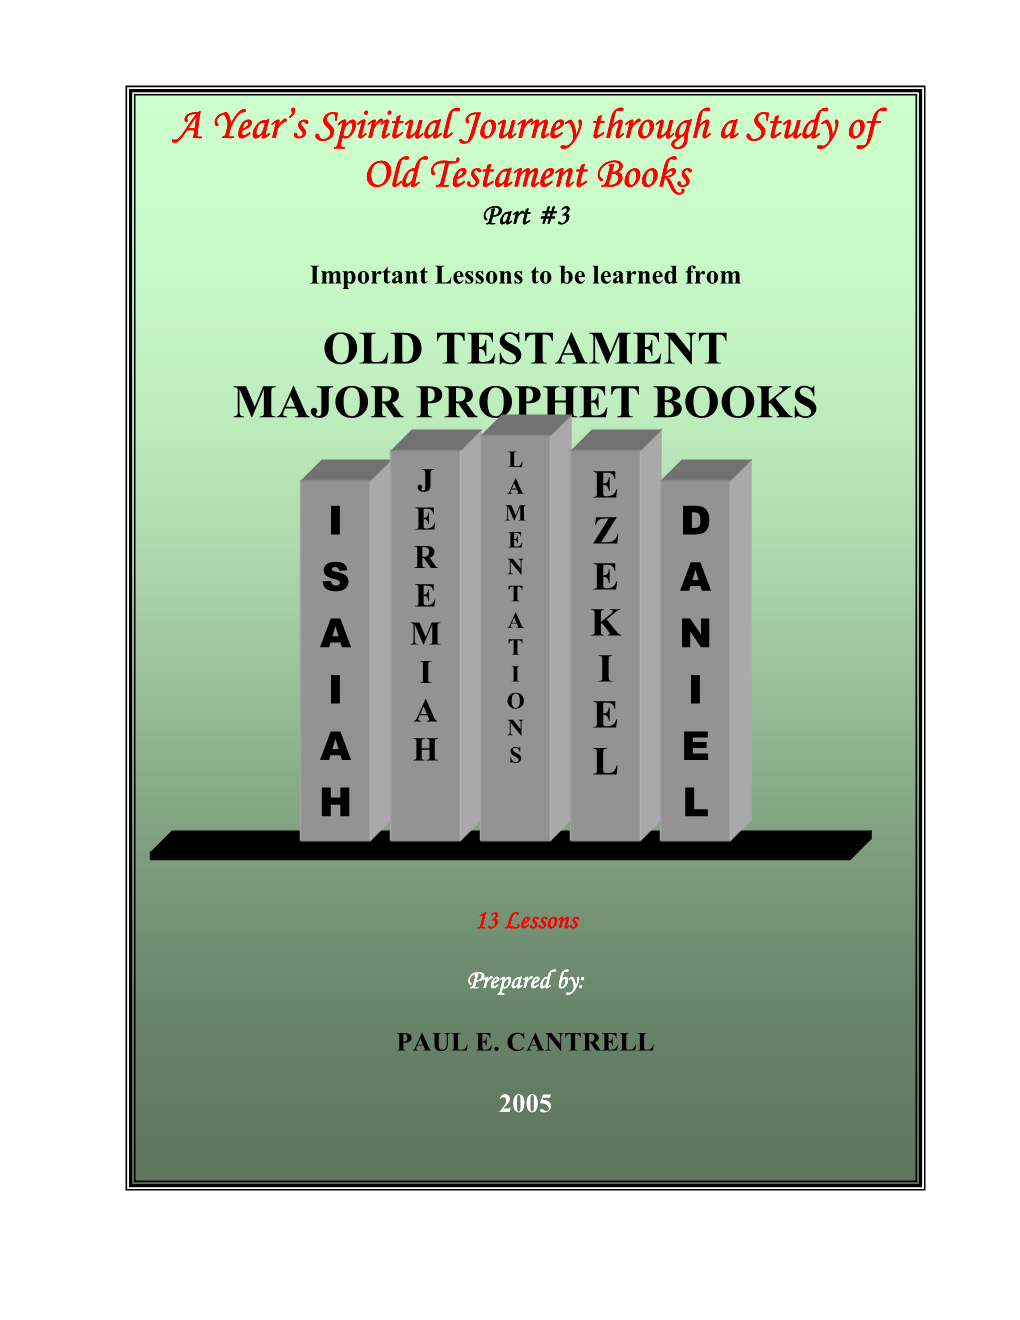 Old Testament Major Prophet Books